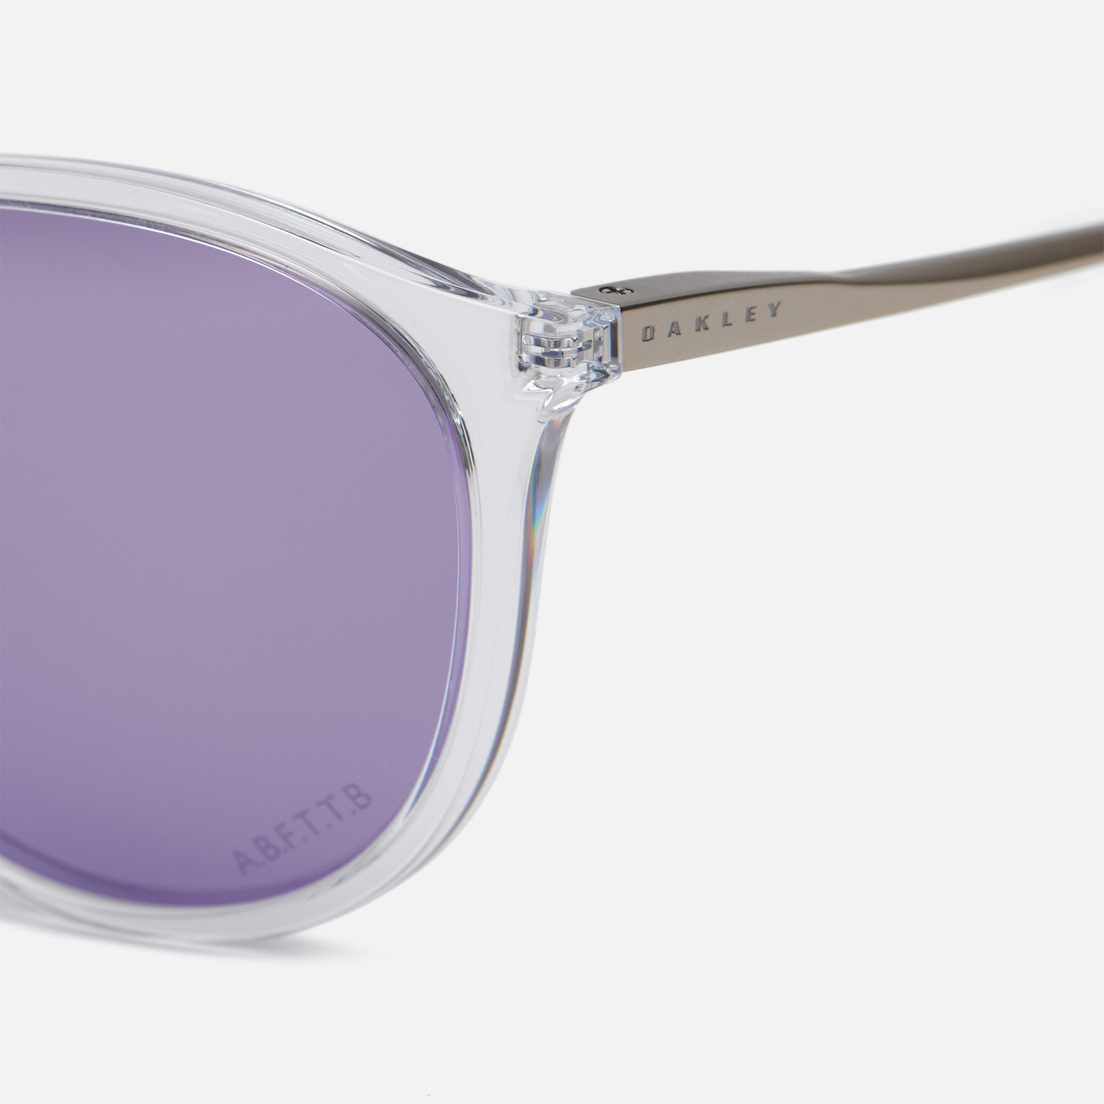 Oakley Солнцезащитные очки Mikaela Shiffrin Signature Series Sielo